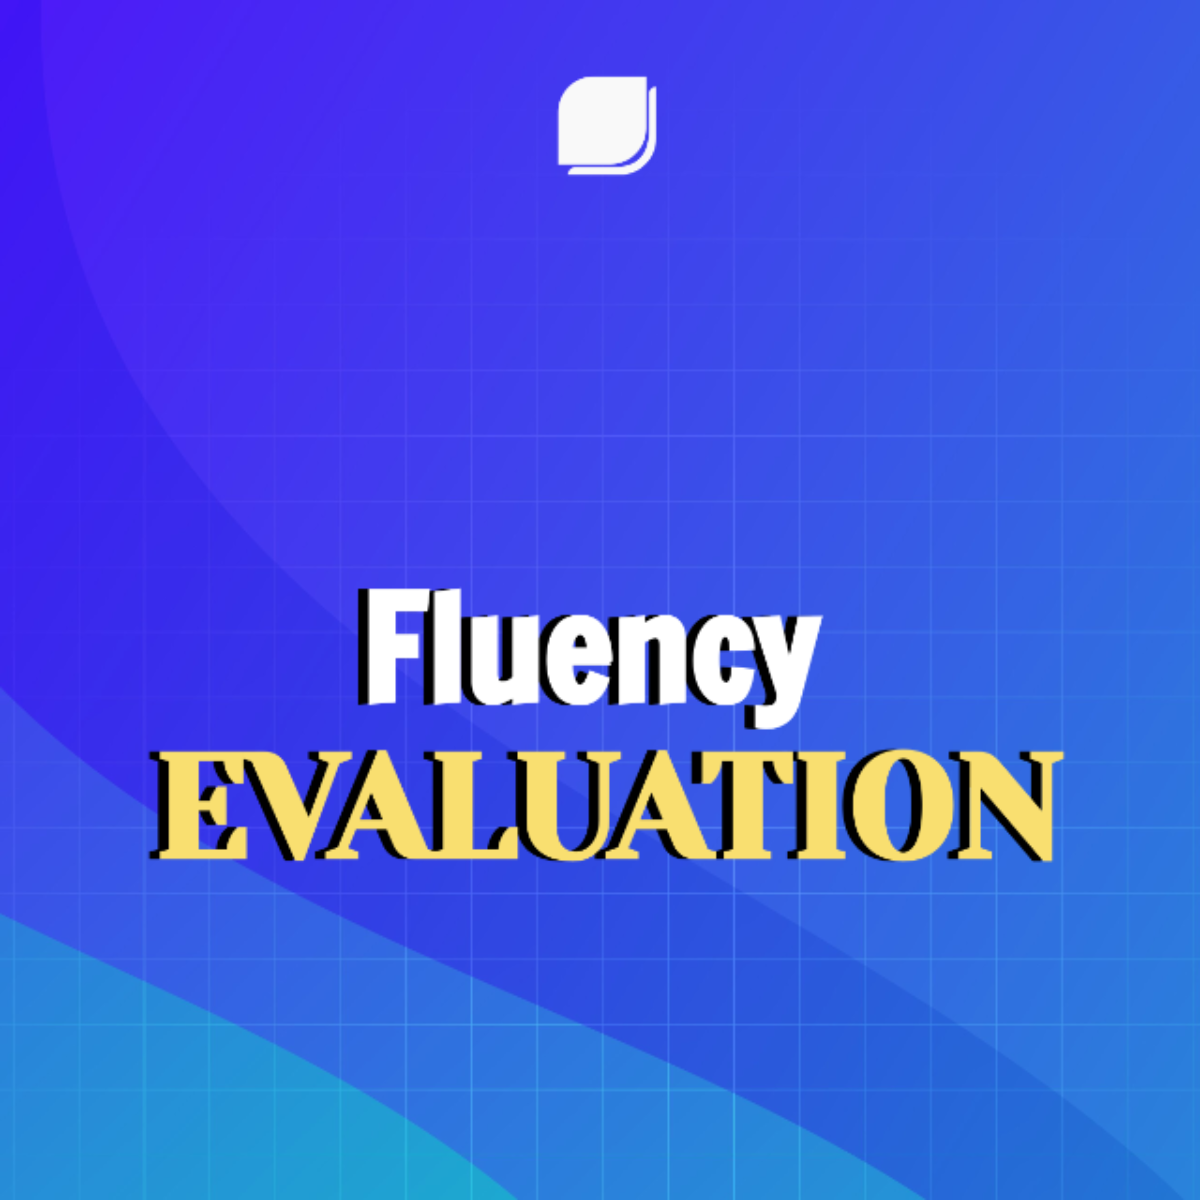 Fluency Evaluation Template